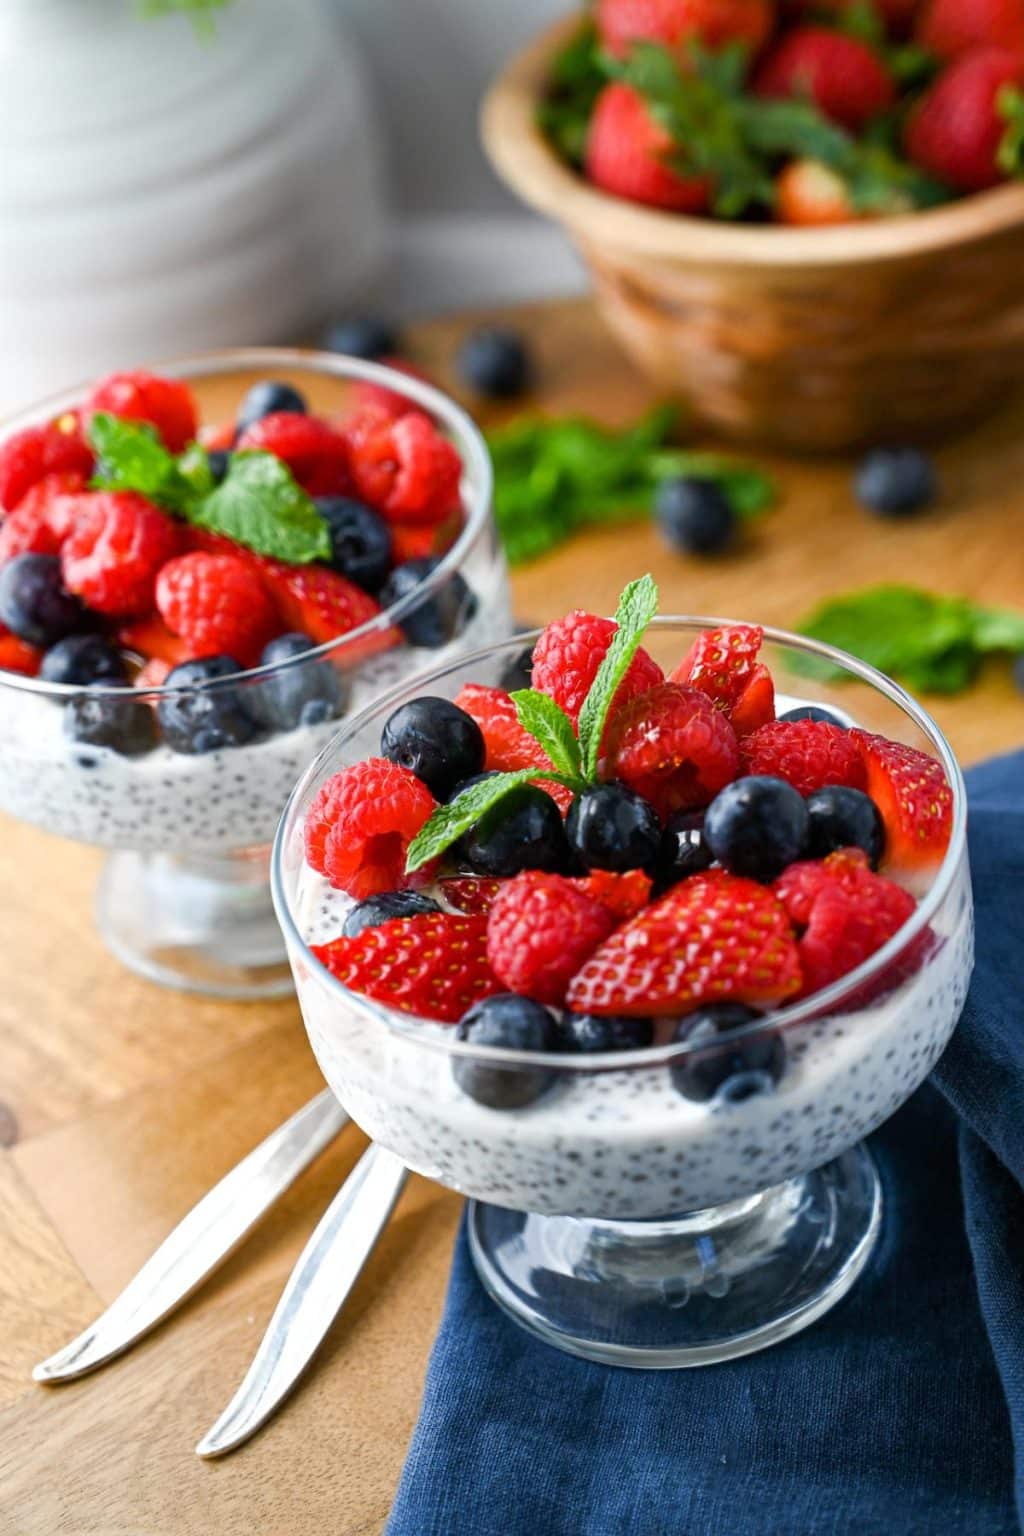 Chia Parfaits with Greek Yogurt and Summer Berries